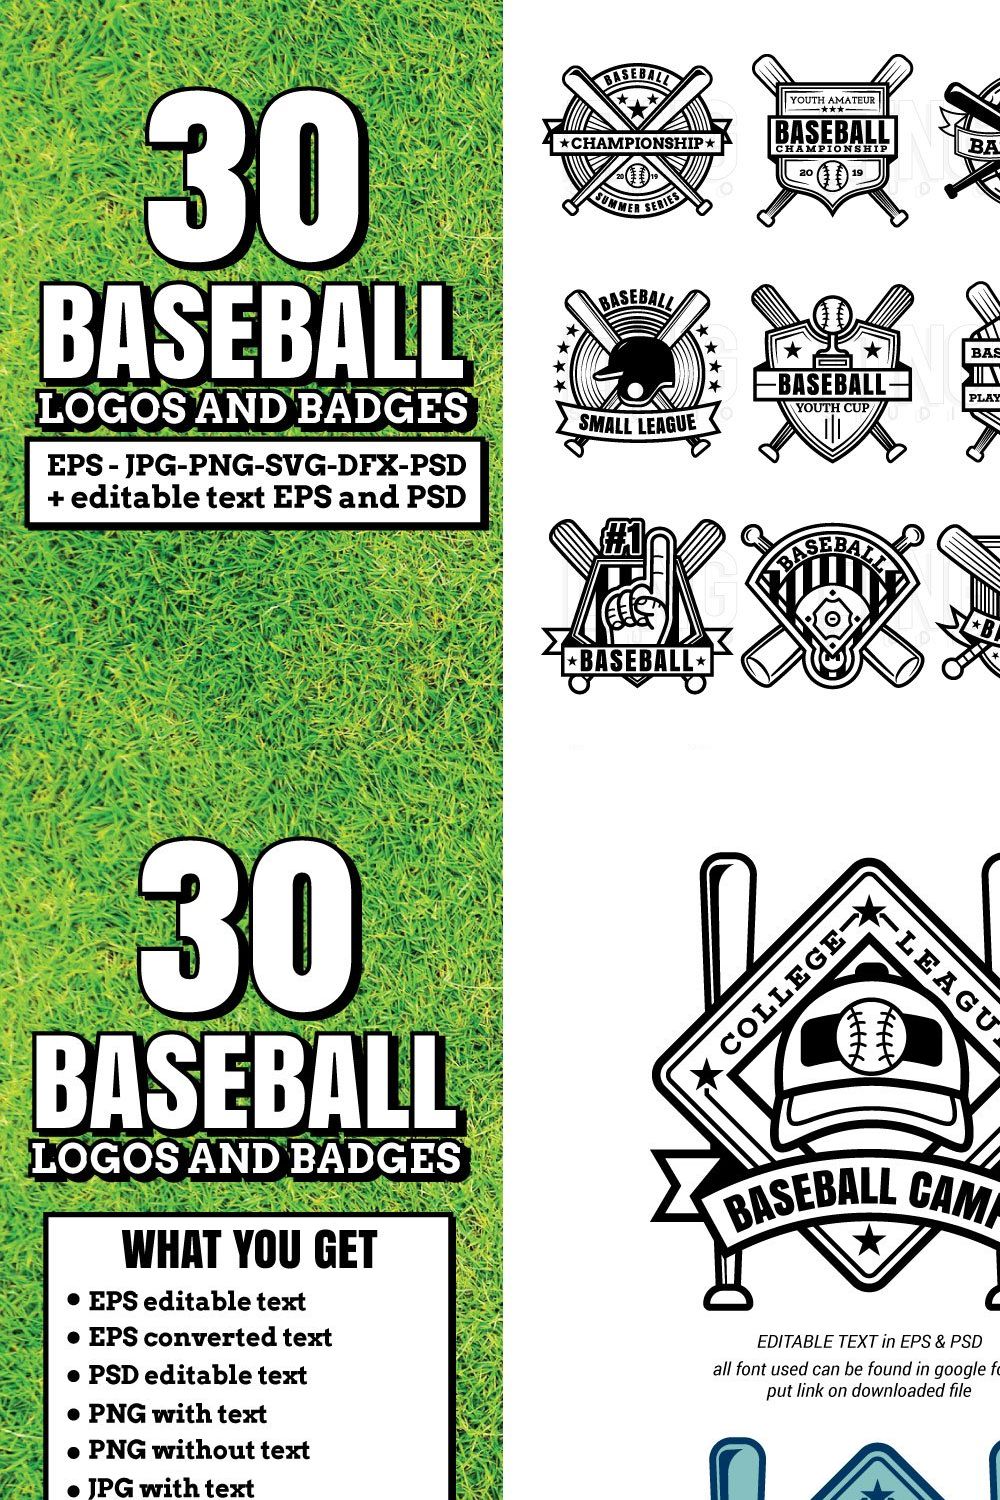 30 Baseball logos and badges pinterest preview image.